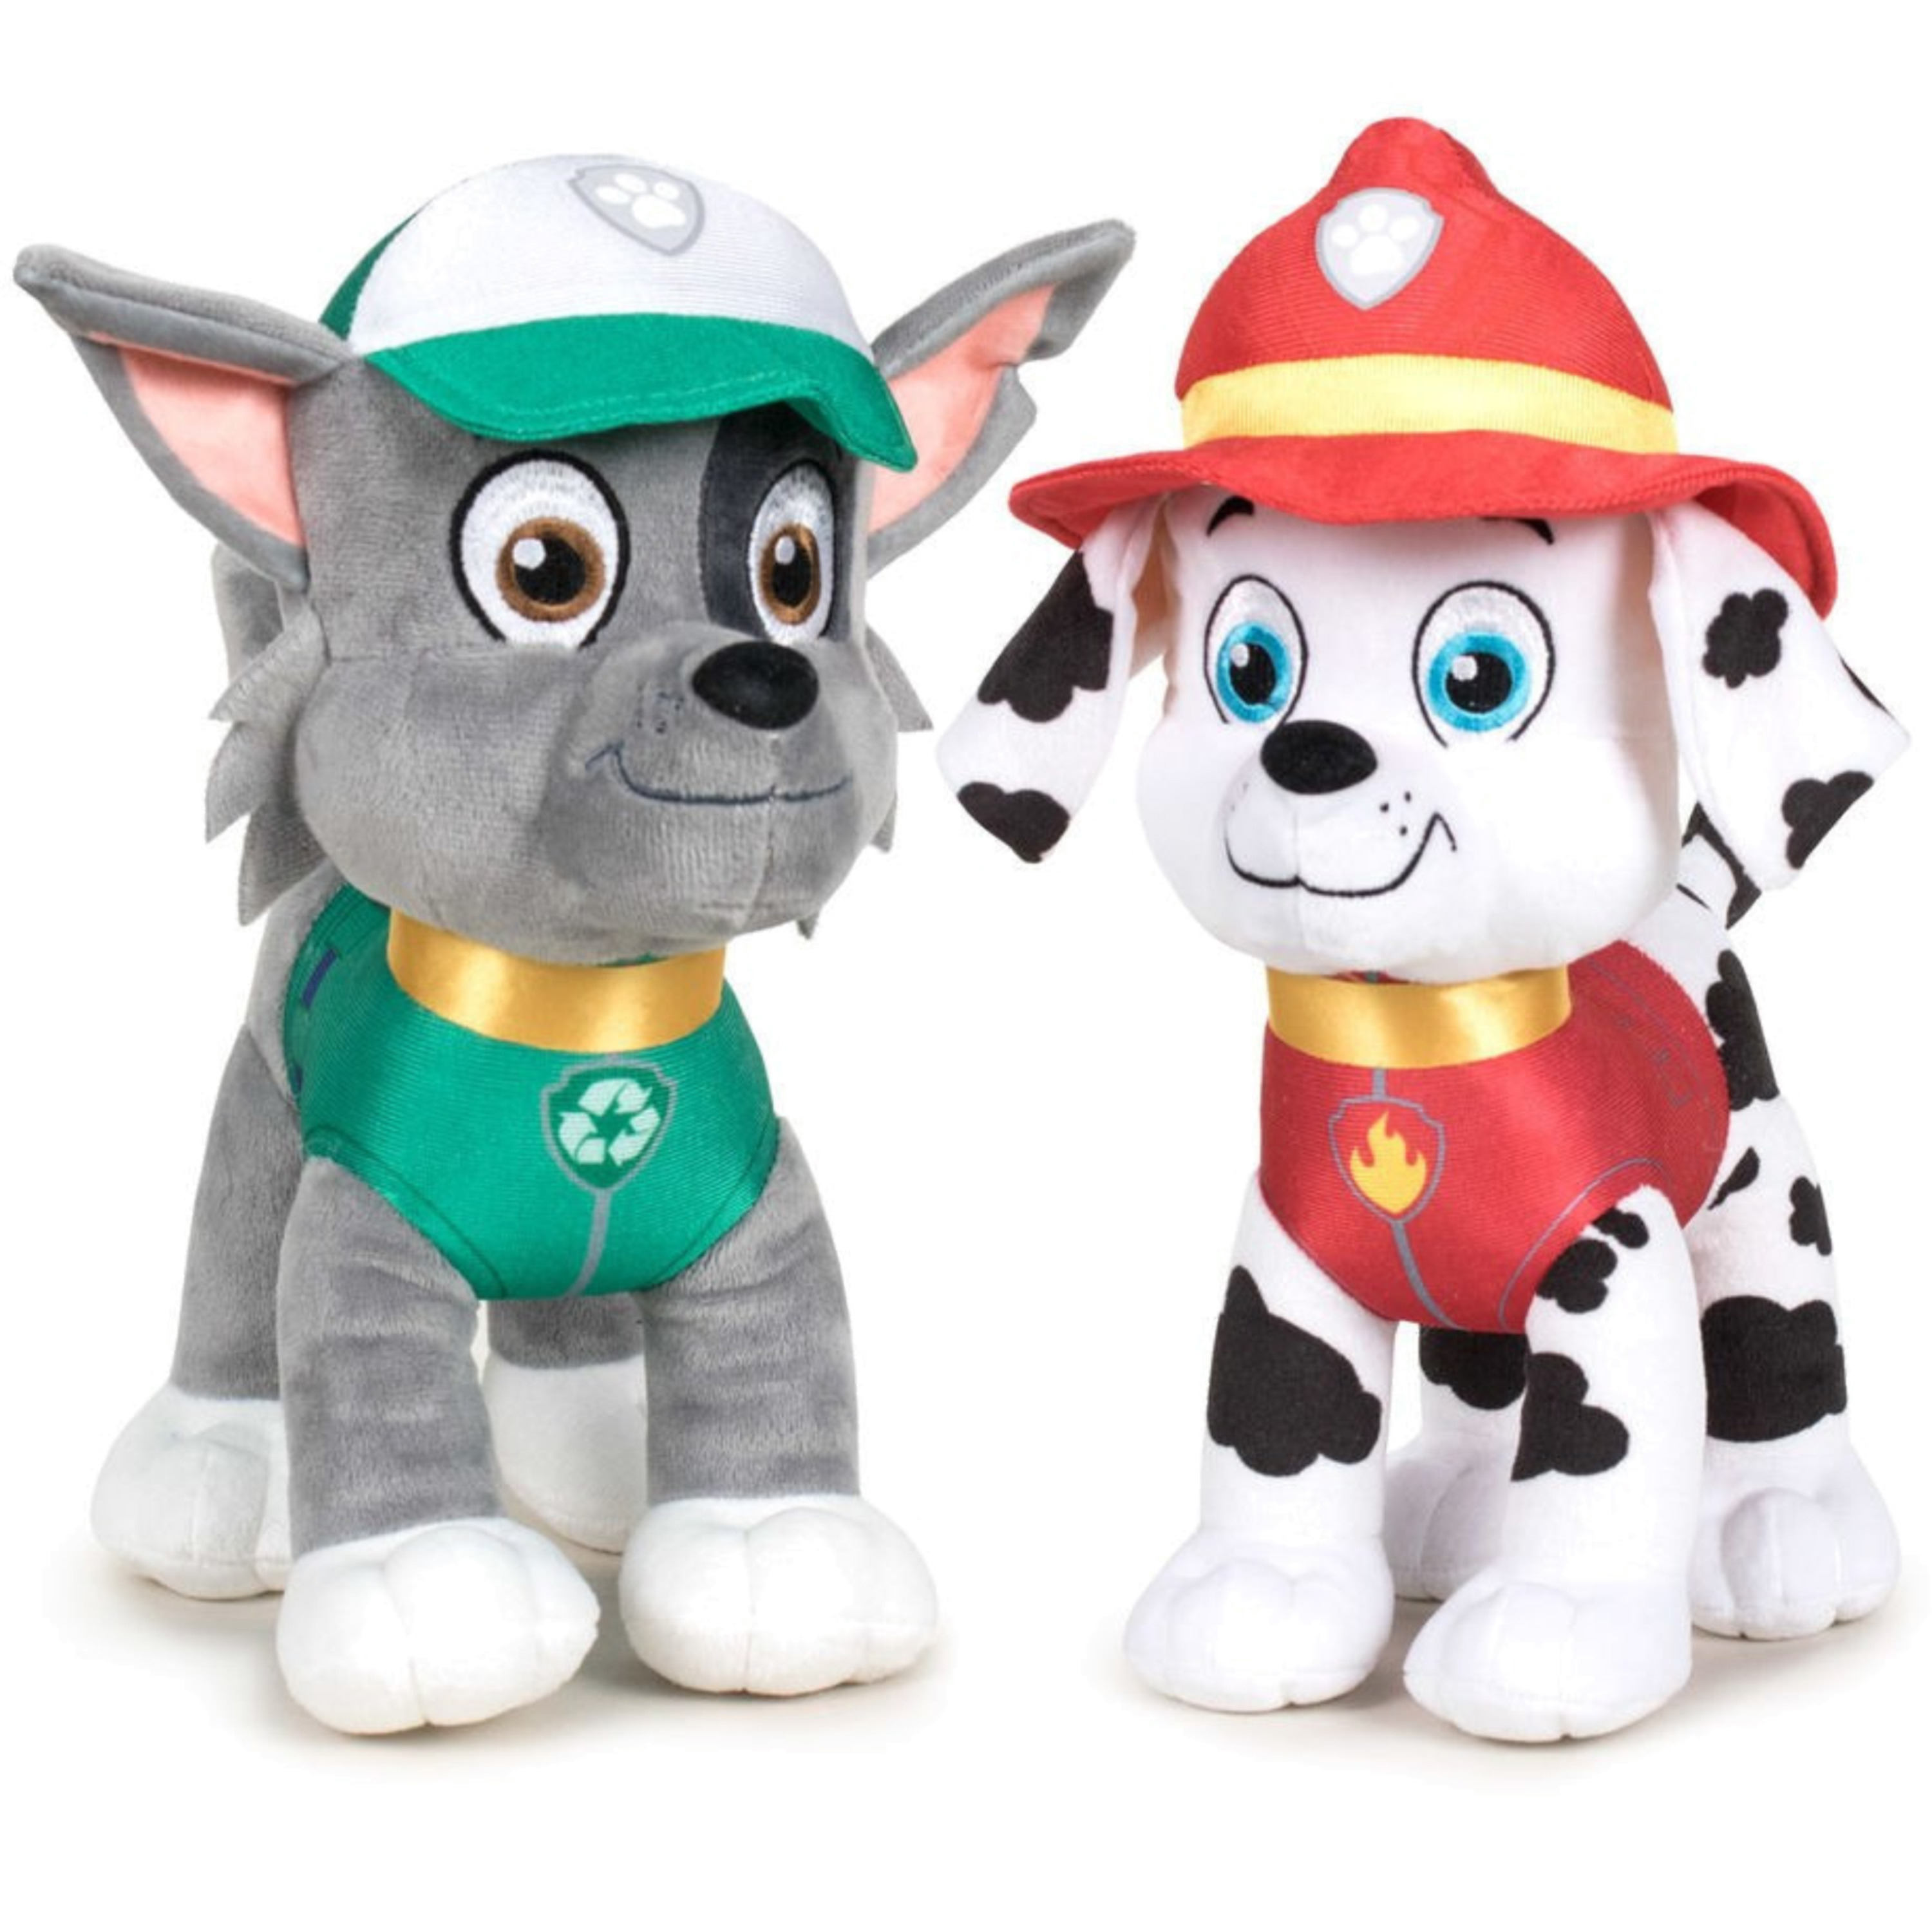 Paw Patrol figuren speelgoed knuffels set van 2x karakters Marshall en Rocky 19 cm